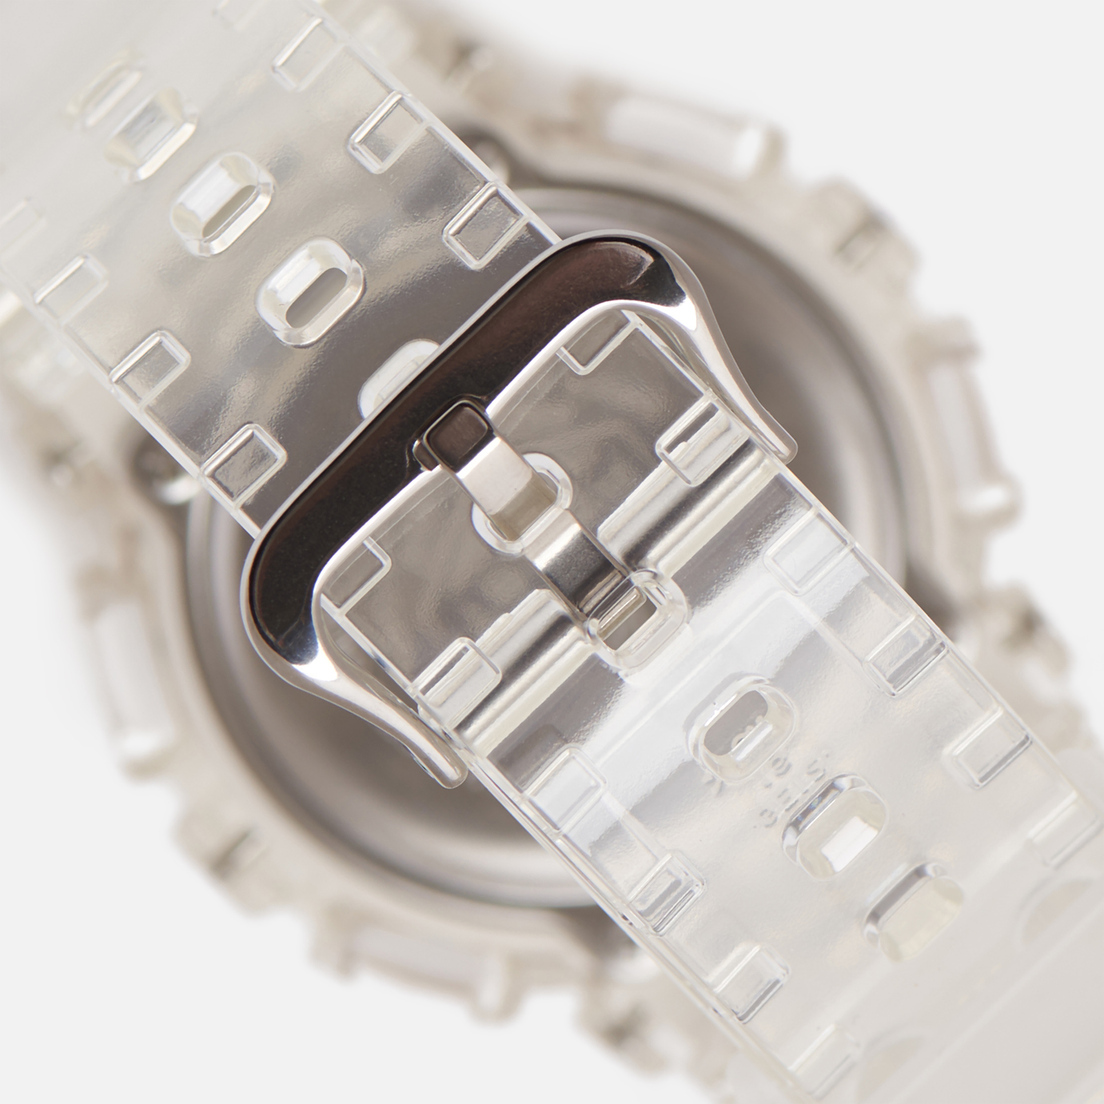 CASIO Наручные часы G-SHOCK GMA-S110SR-7AER S Series